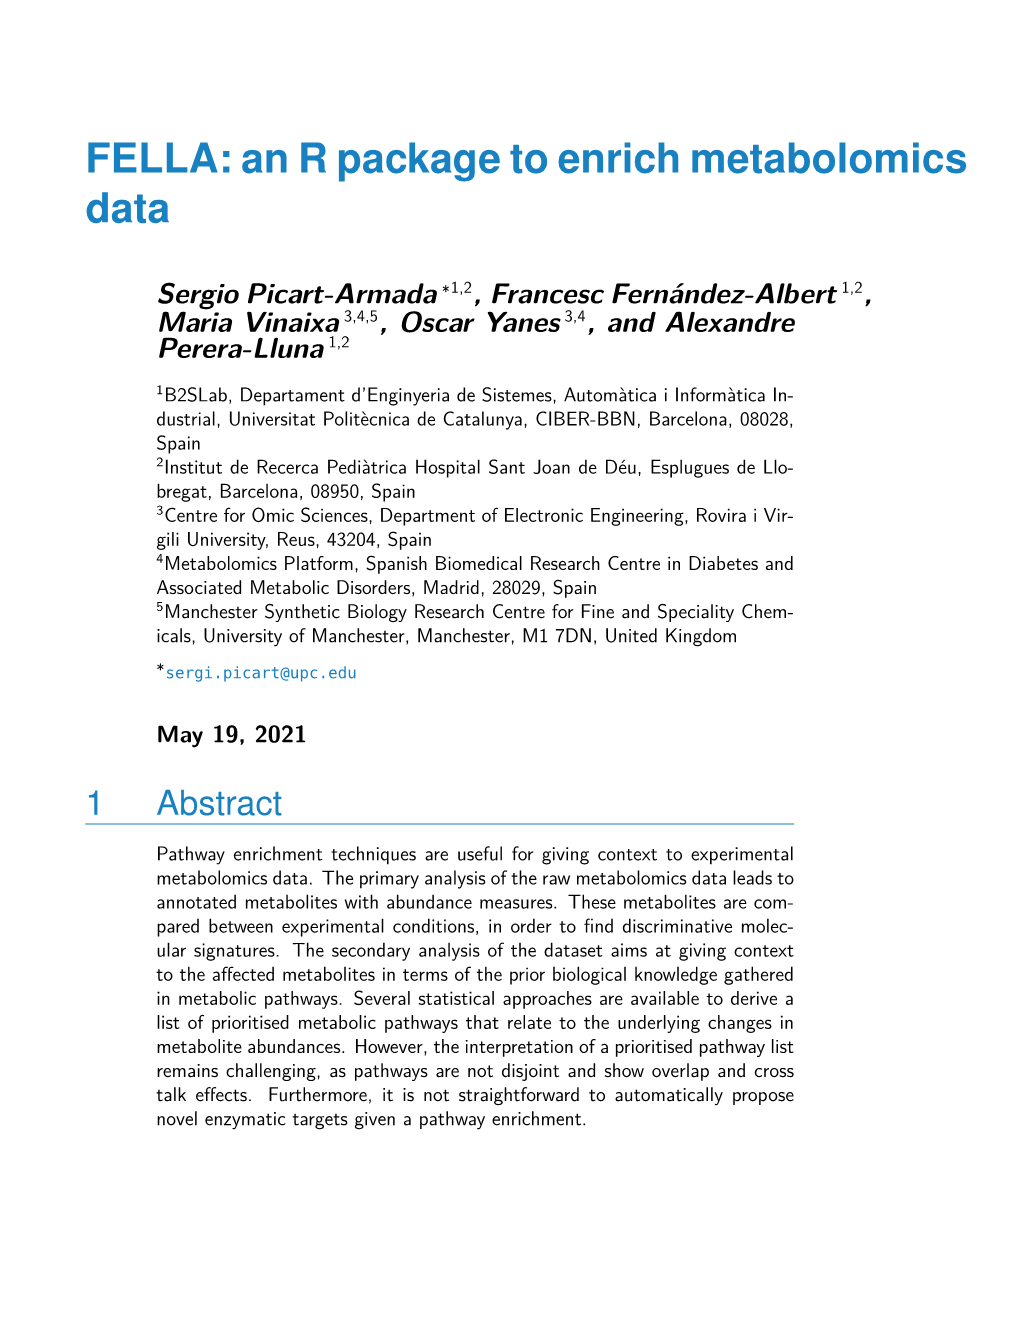 FELLA: an R Package to Enrich Metabolomics Data